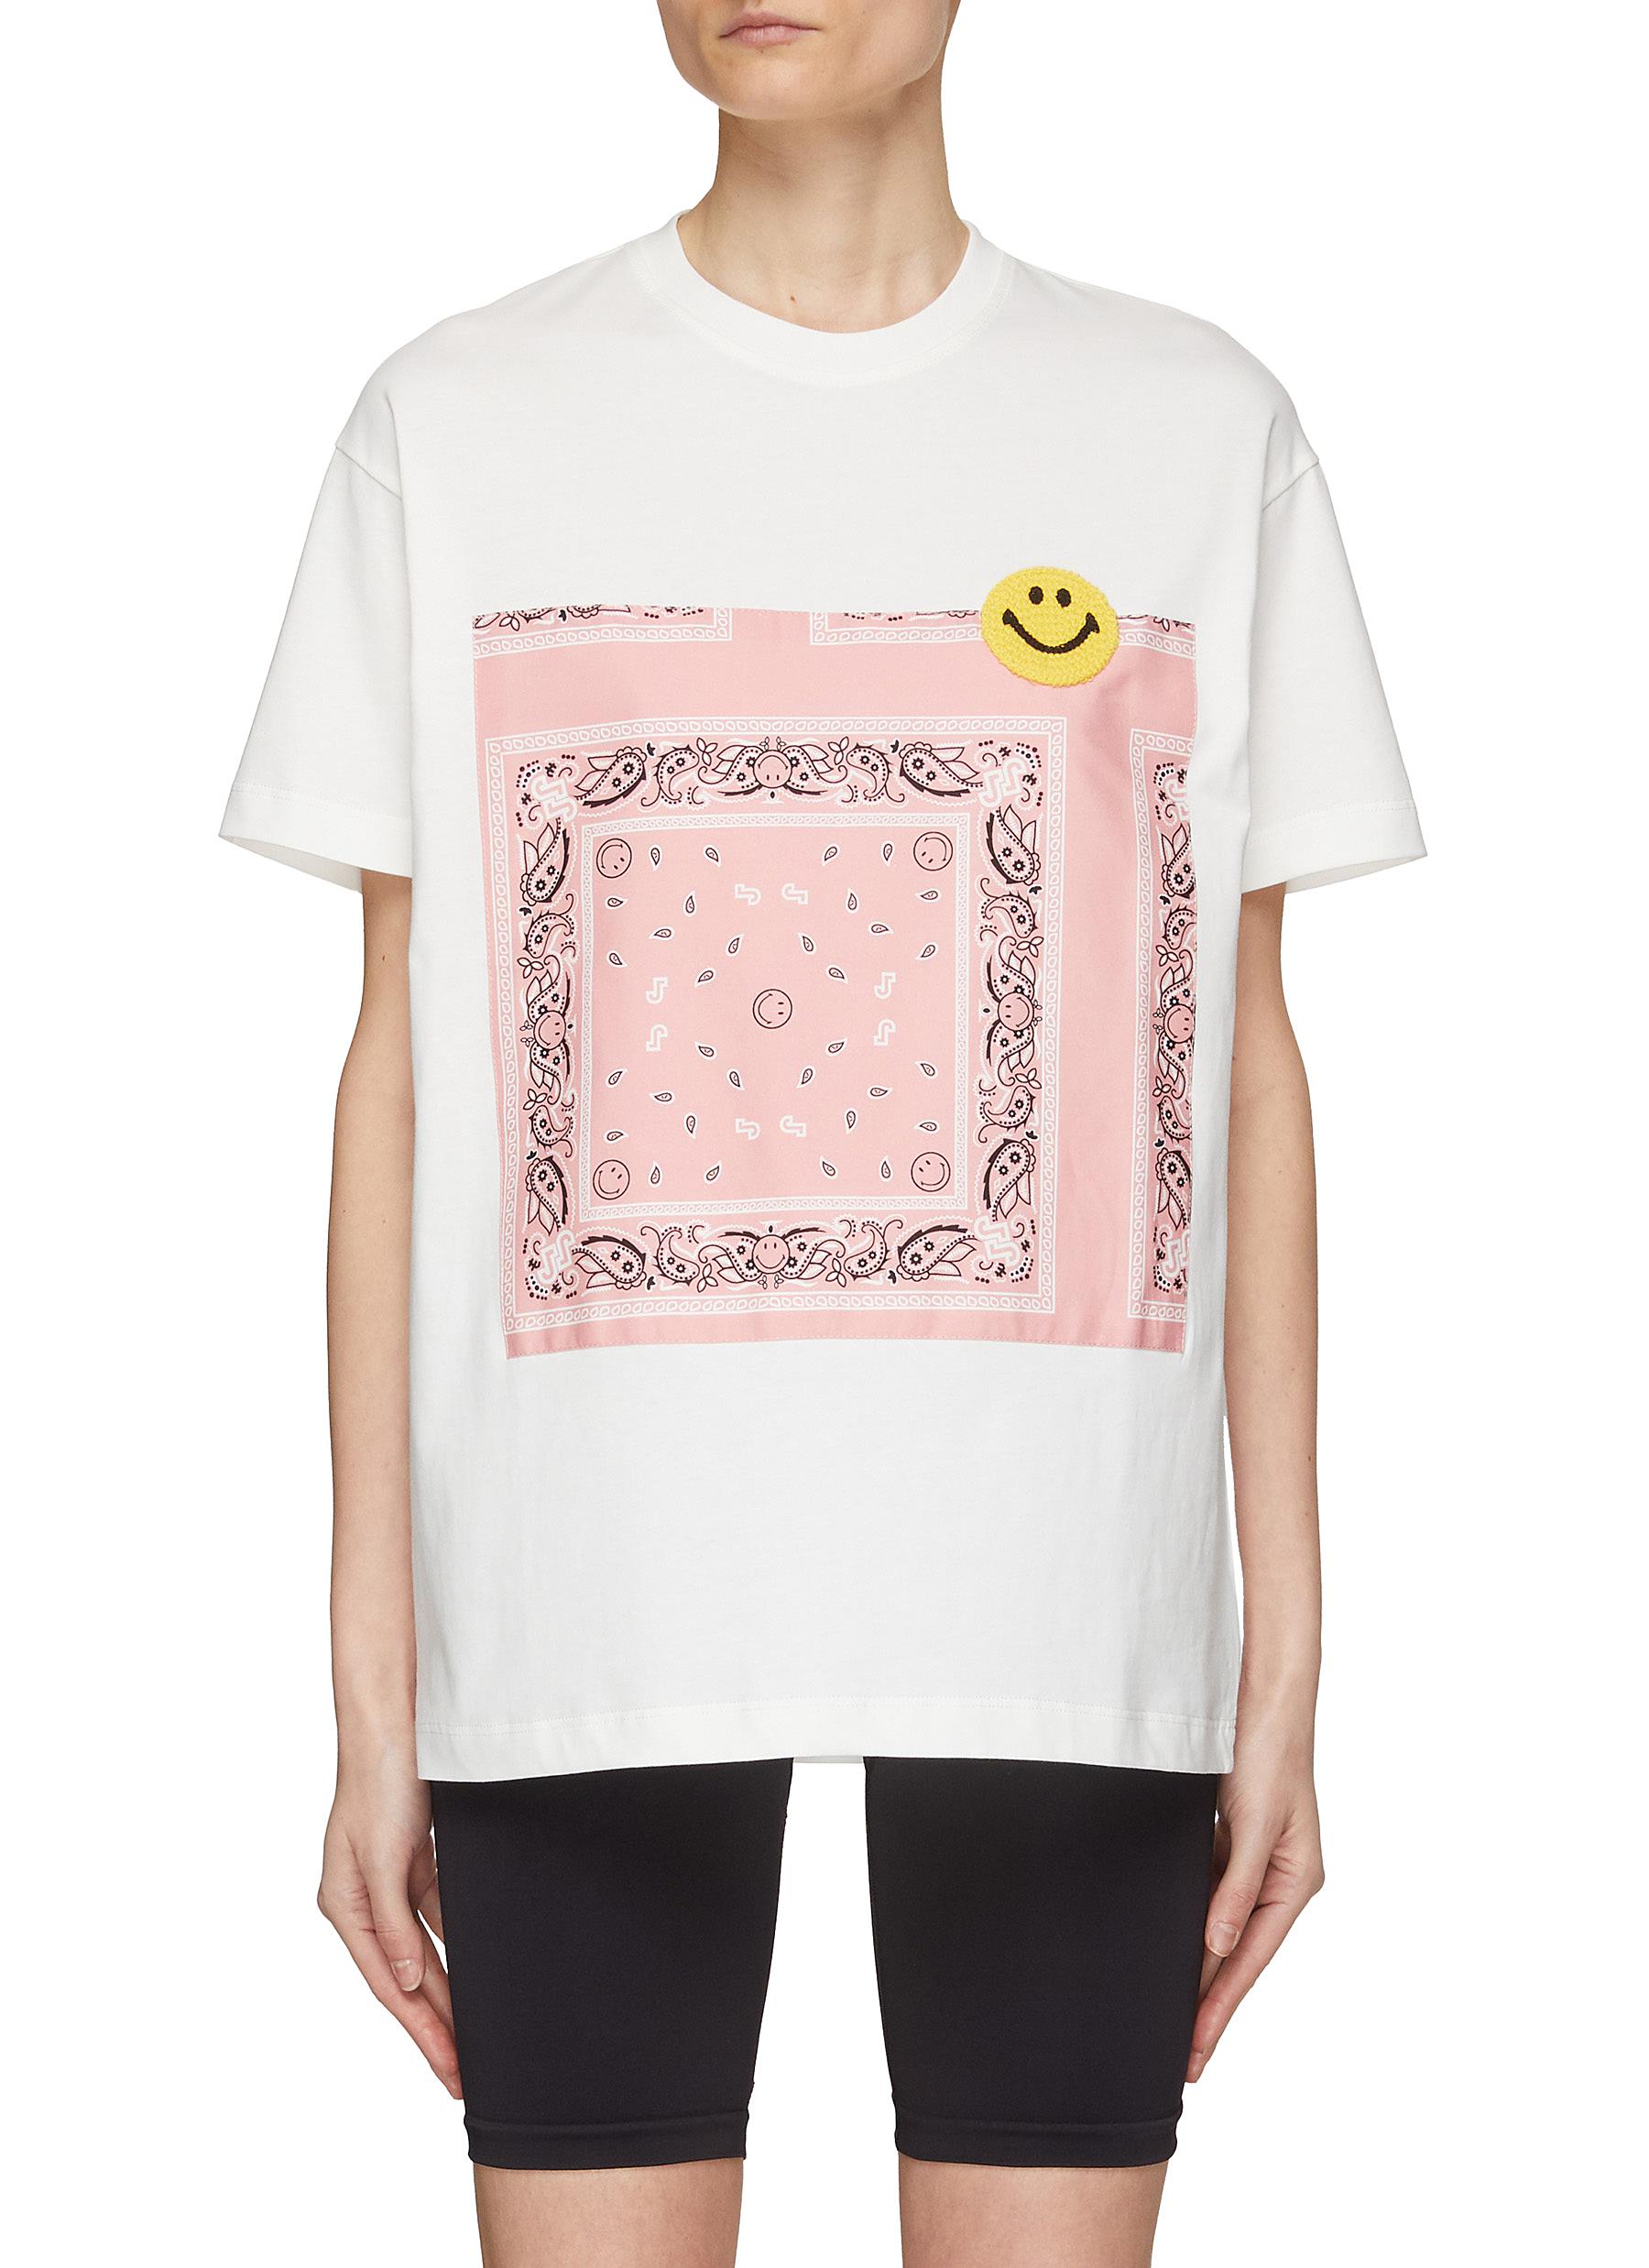 JOSHUA'S Crocheted Smiley Face Bandana Panel Crewneck T-Shirt